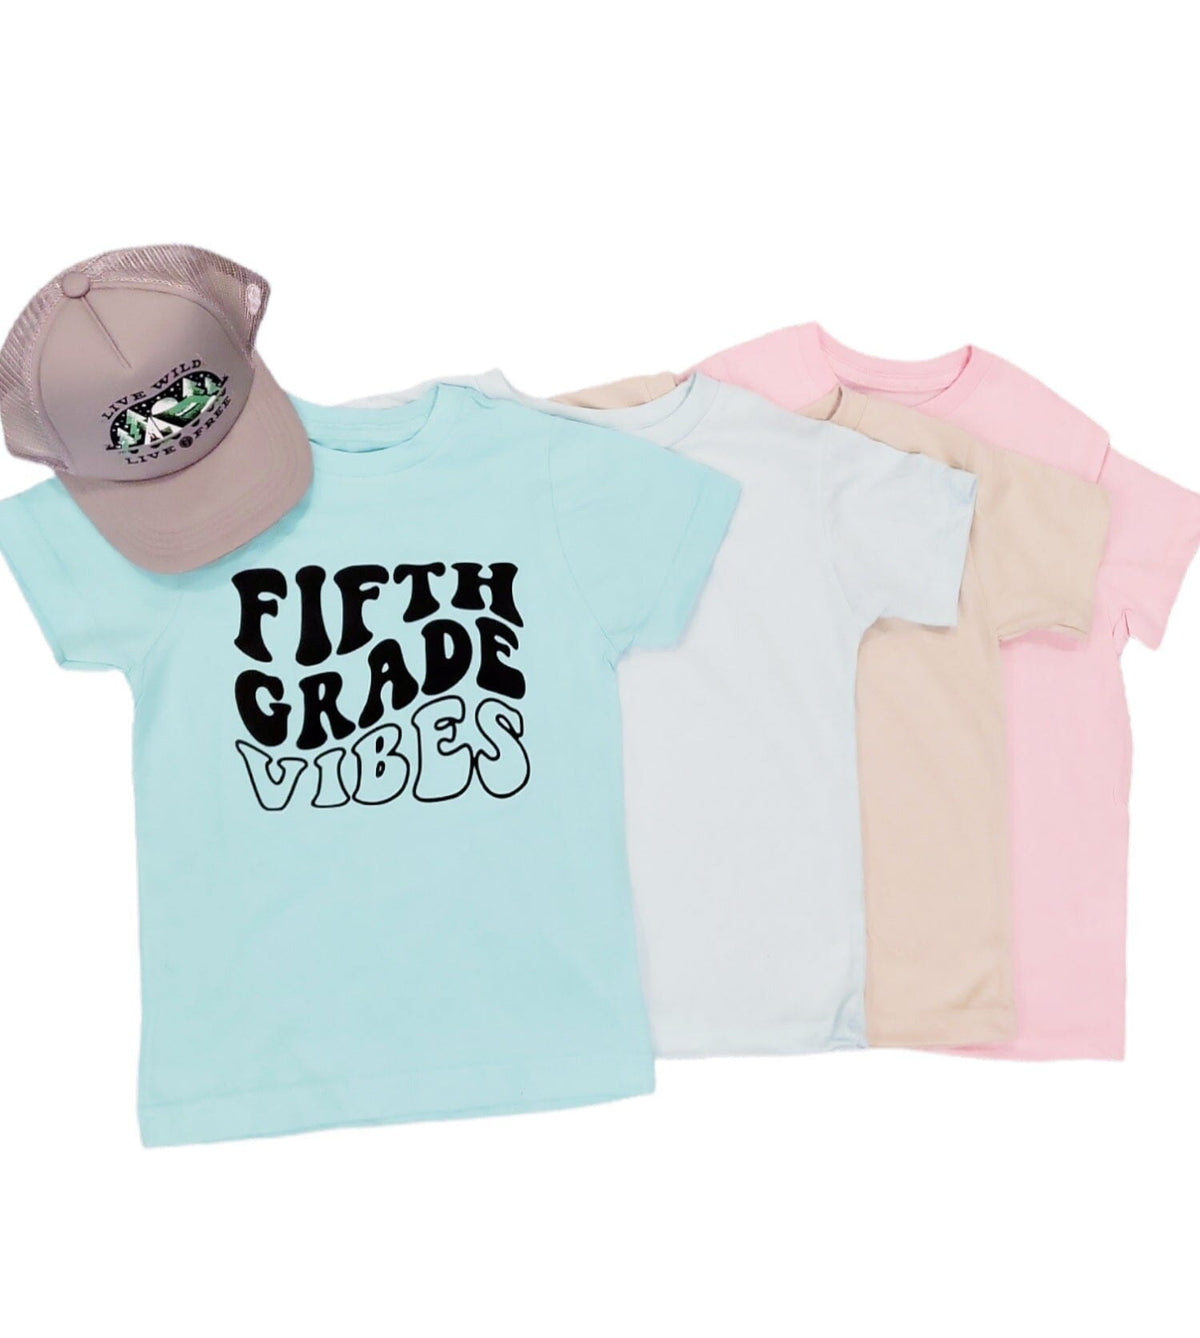 Fifth Grade Vibes Shirt